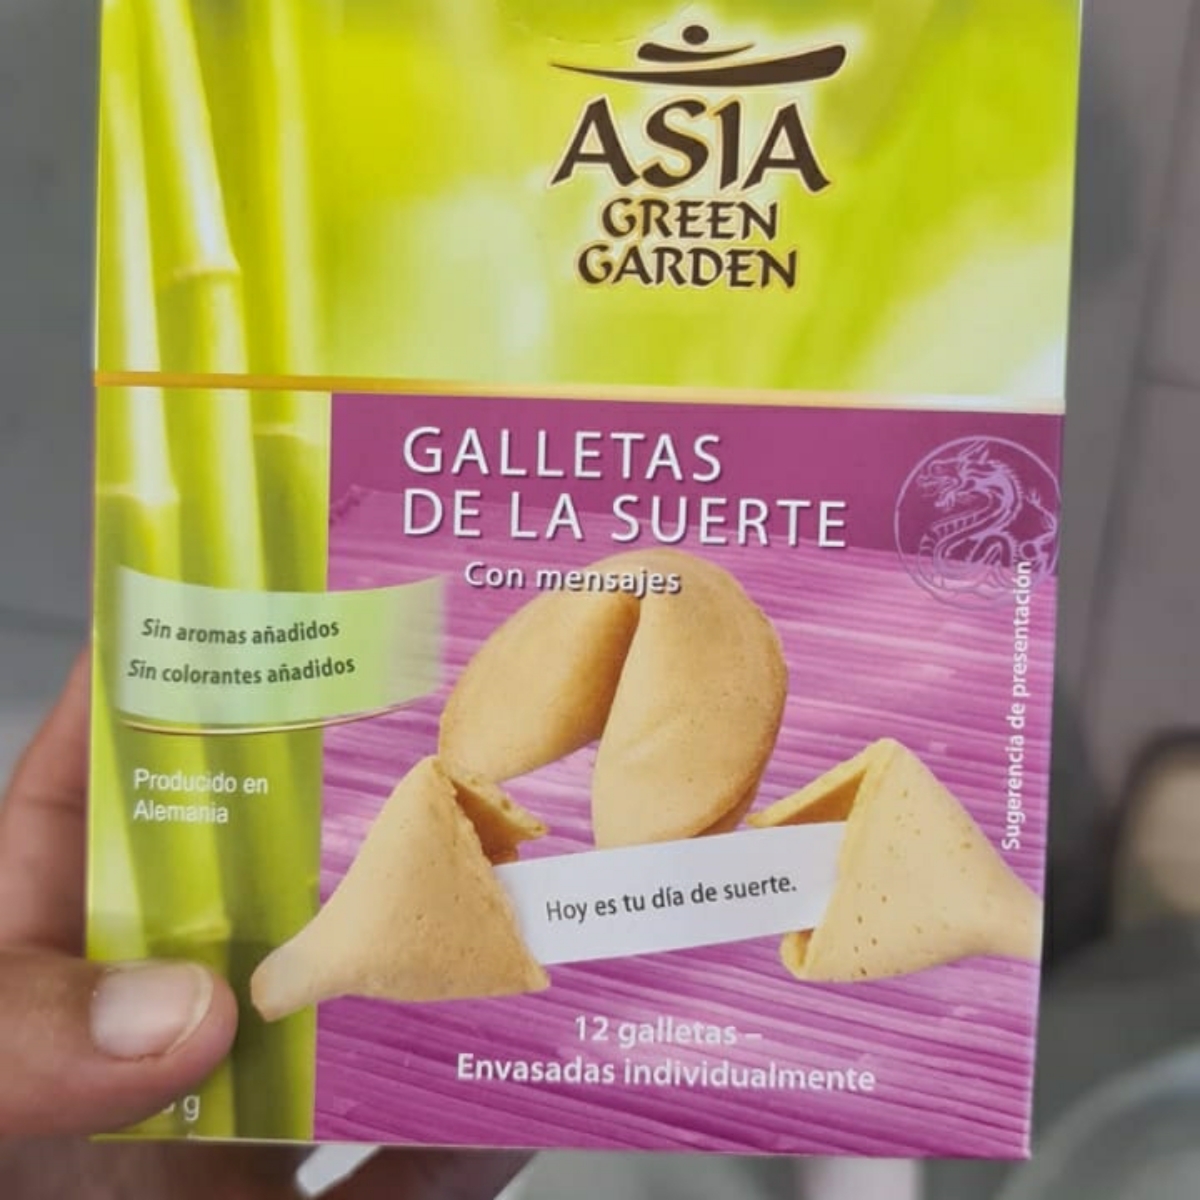 Asia Green Garden Galletas de la suerte Reviews